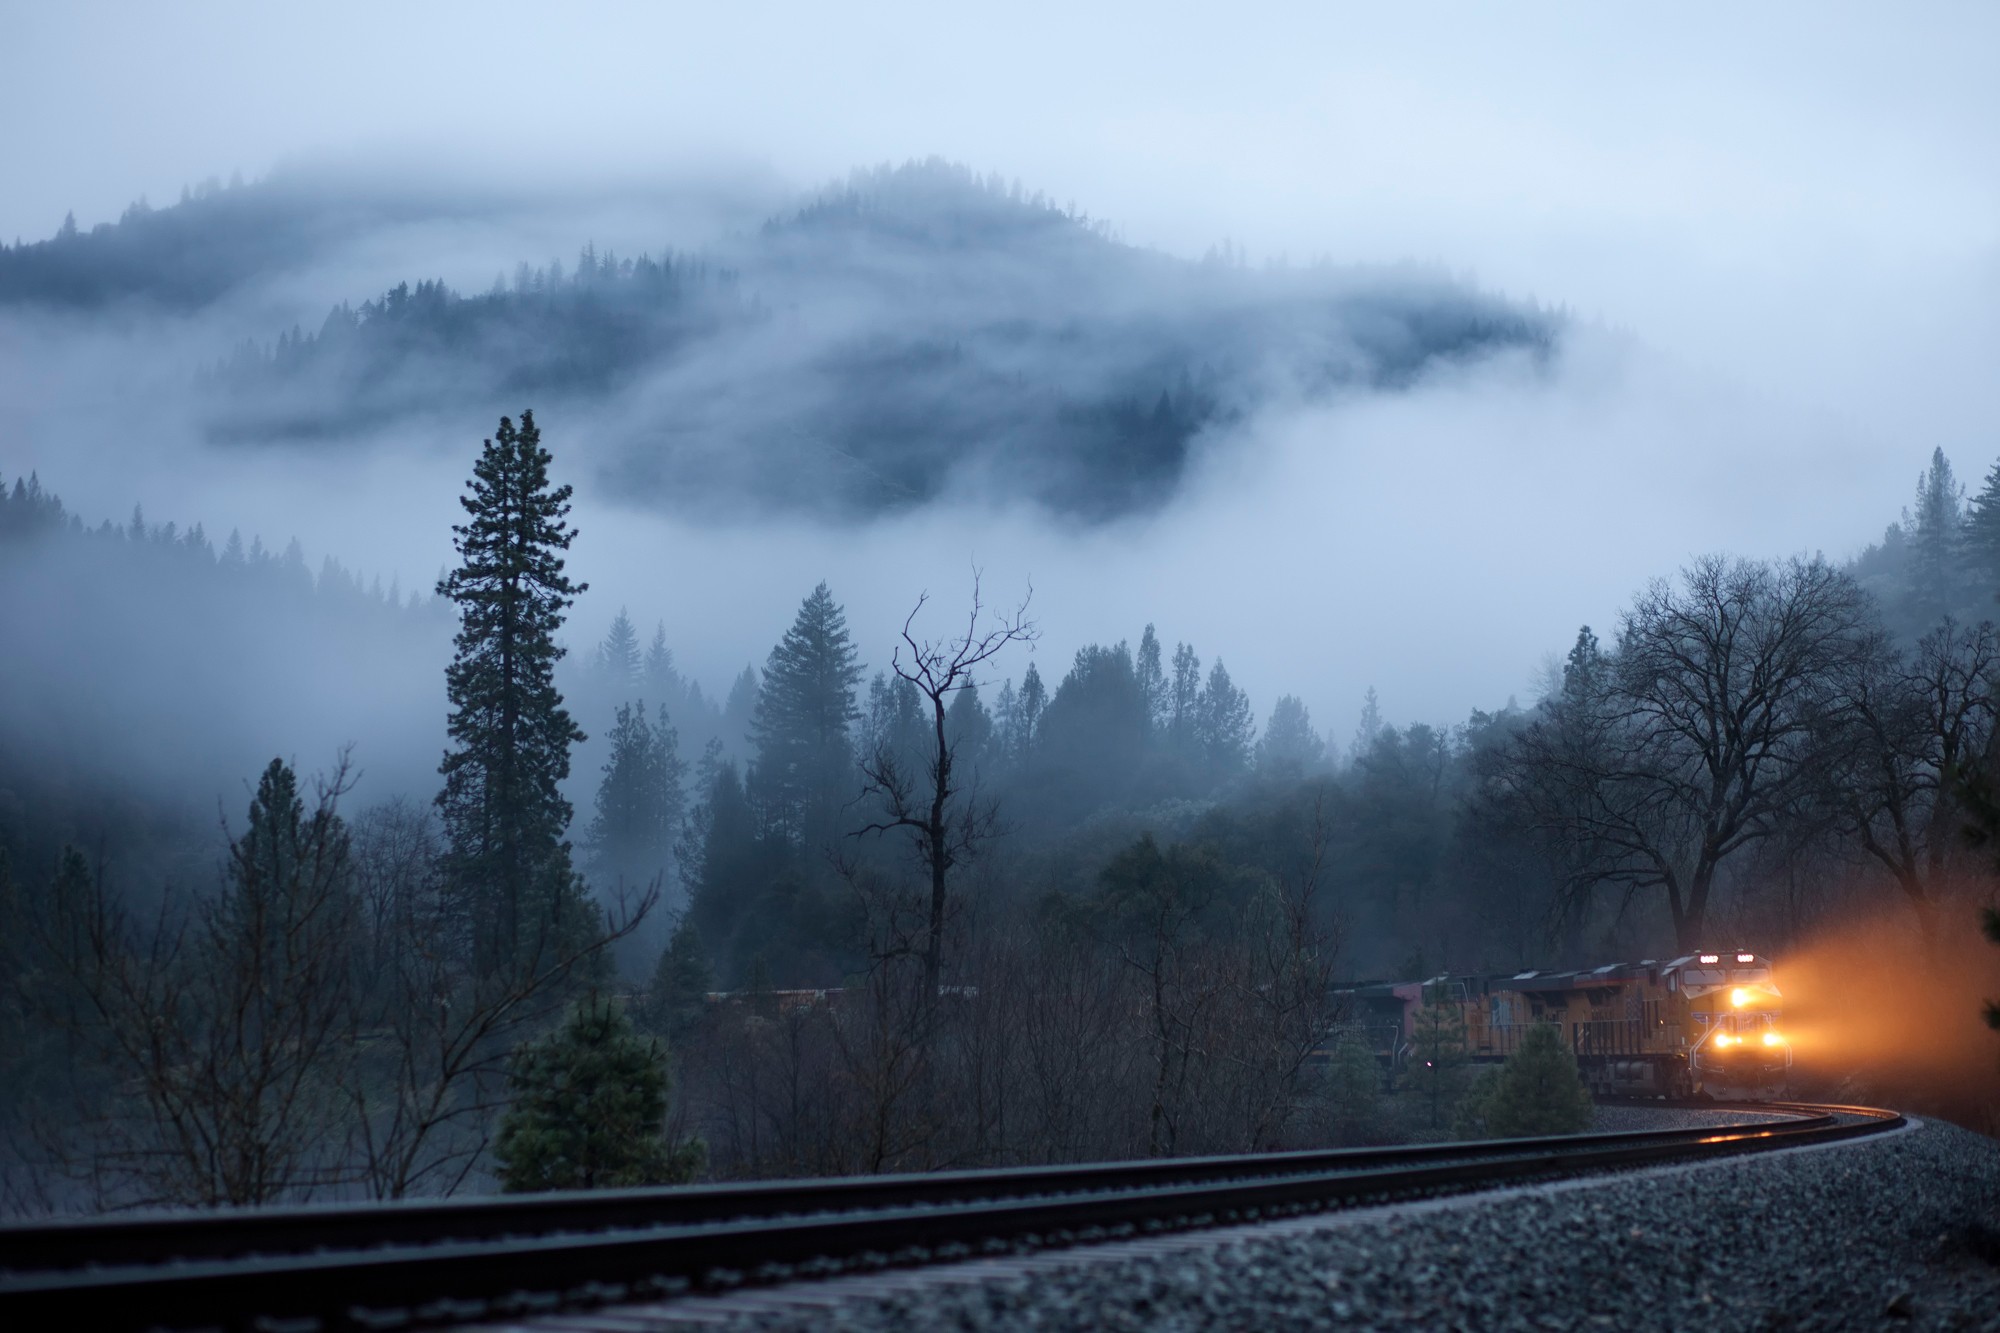 General 2000x1333 nature winter trees railway train lights mist forest landscape vehicle